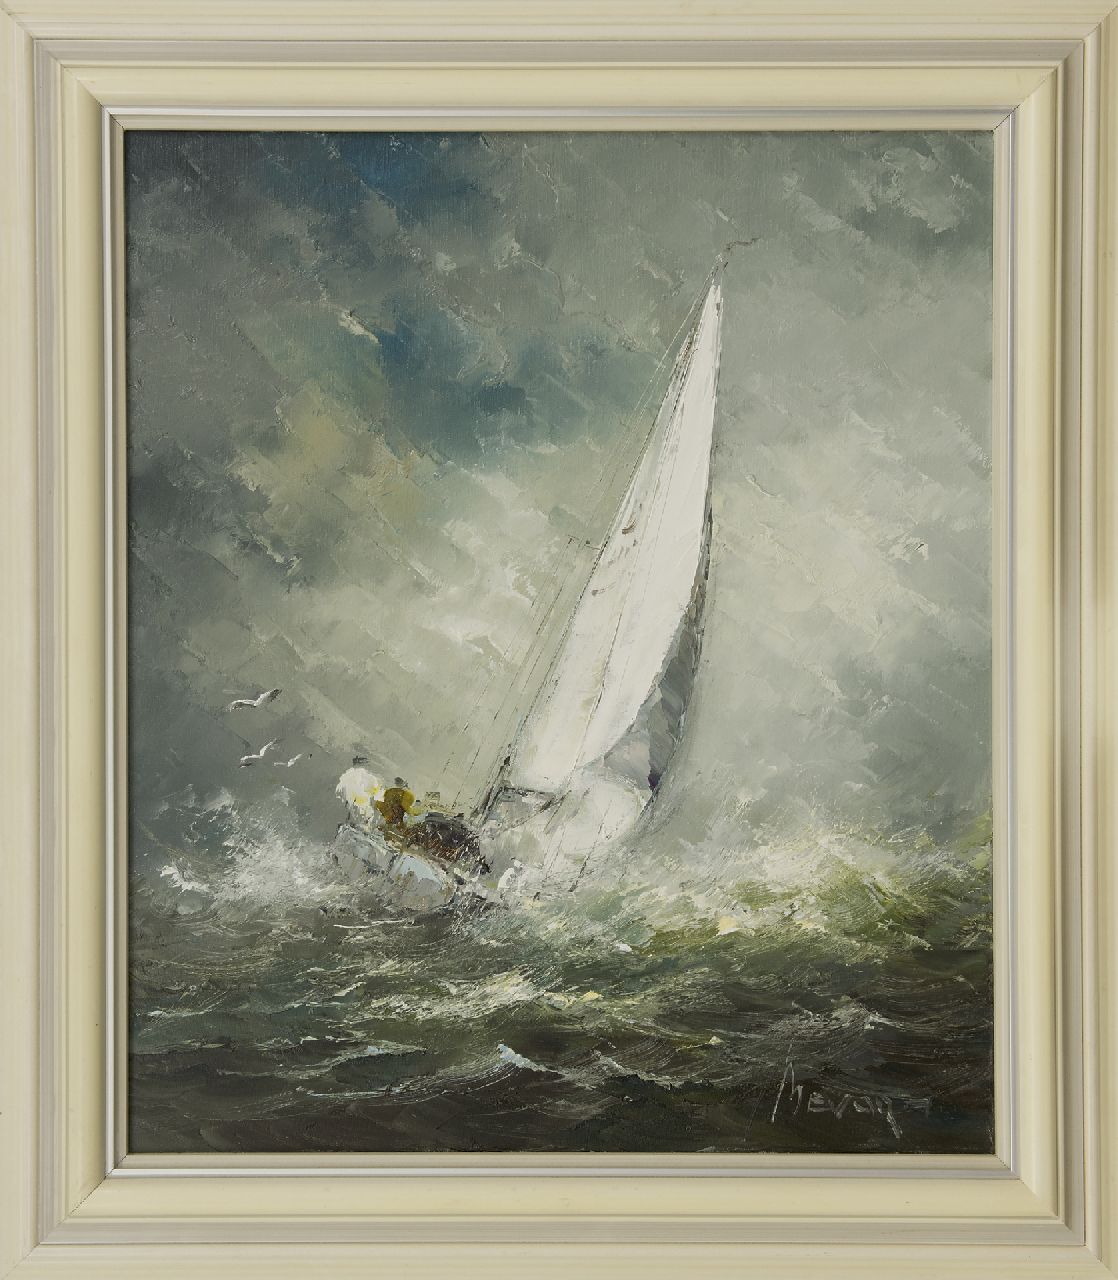 Bévort J.H.H.  | Johannes Hubertus Hendrikus 'Jan' Bévort, Yacht on a rough sea, oil on canvas 70.2 x 60.7 cm, signed l.r.